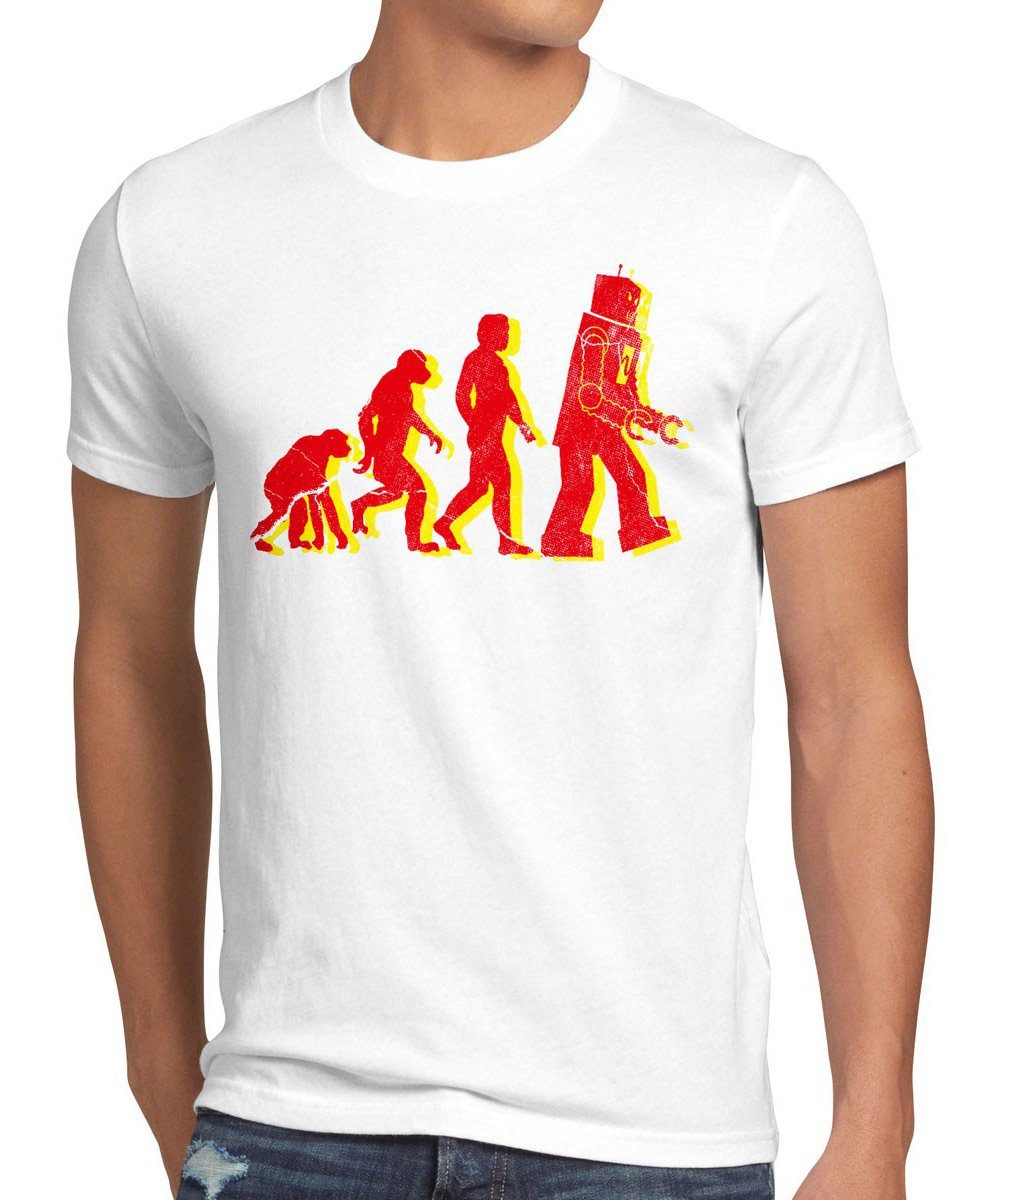 style3 Print-Shirt Herren T-Shirt Evolution big bang roboter sheldon theory cooper darwin neu robot weiß